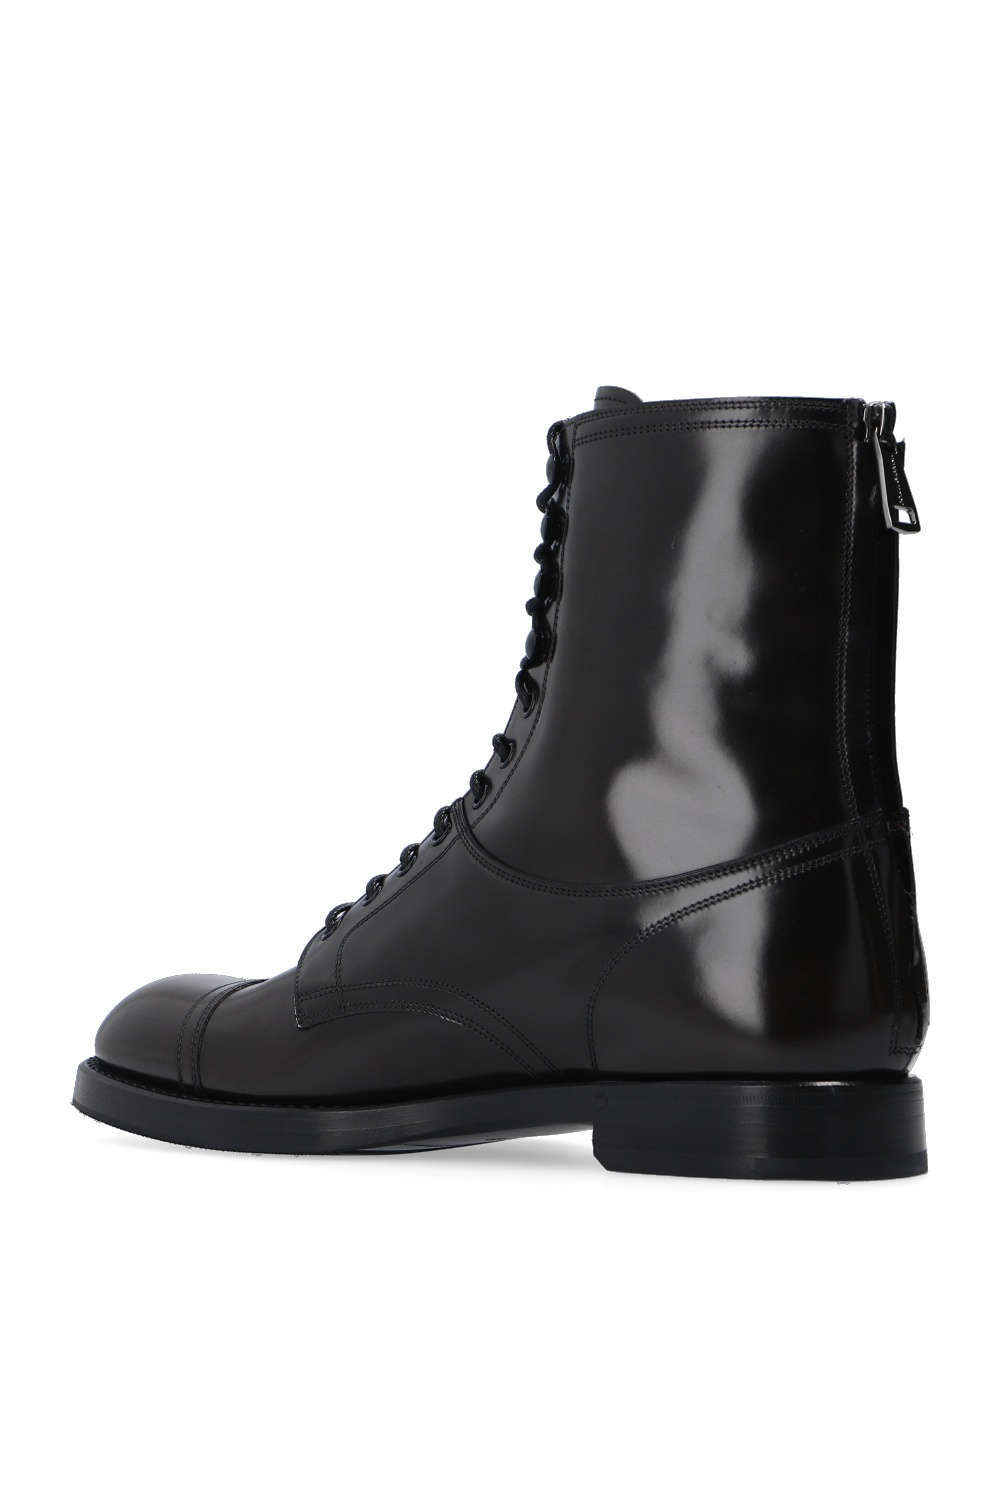 Dolce & Gabbana ‘Michelangelo’ ankle boots